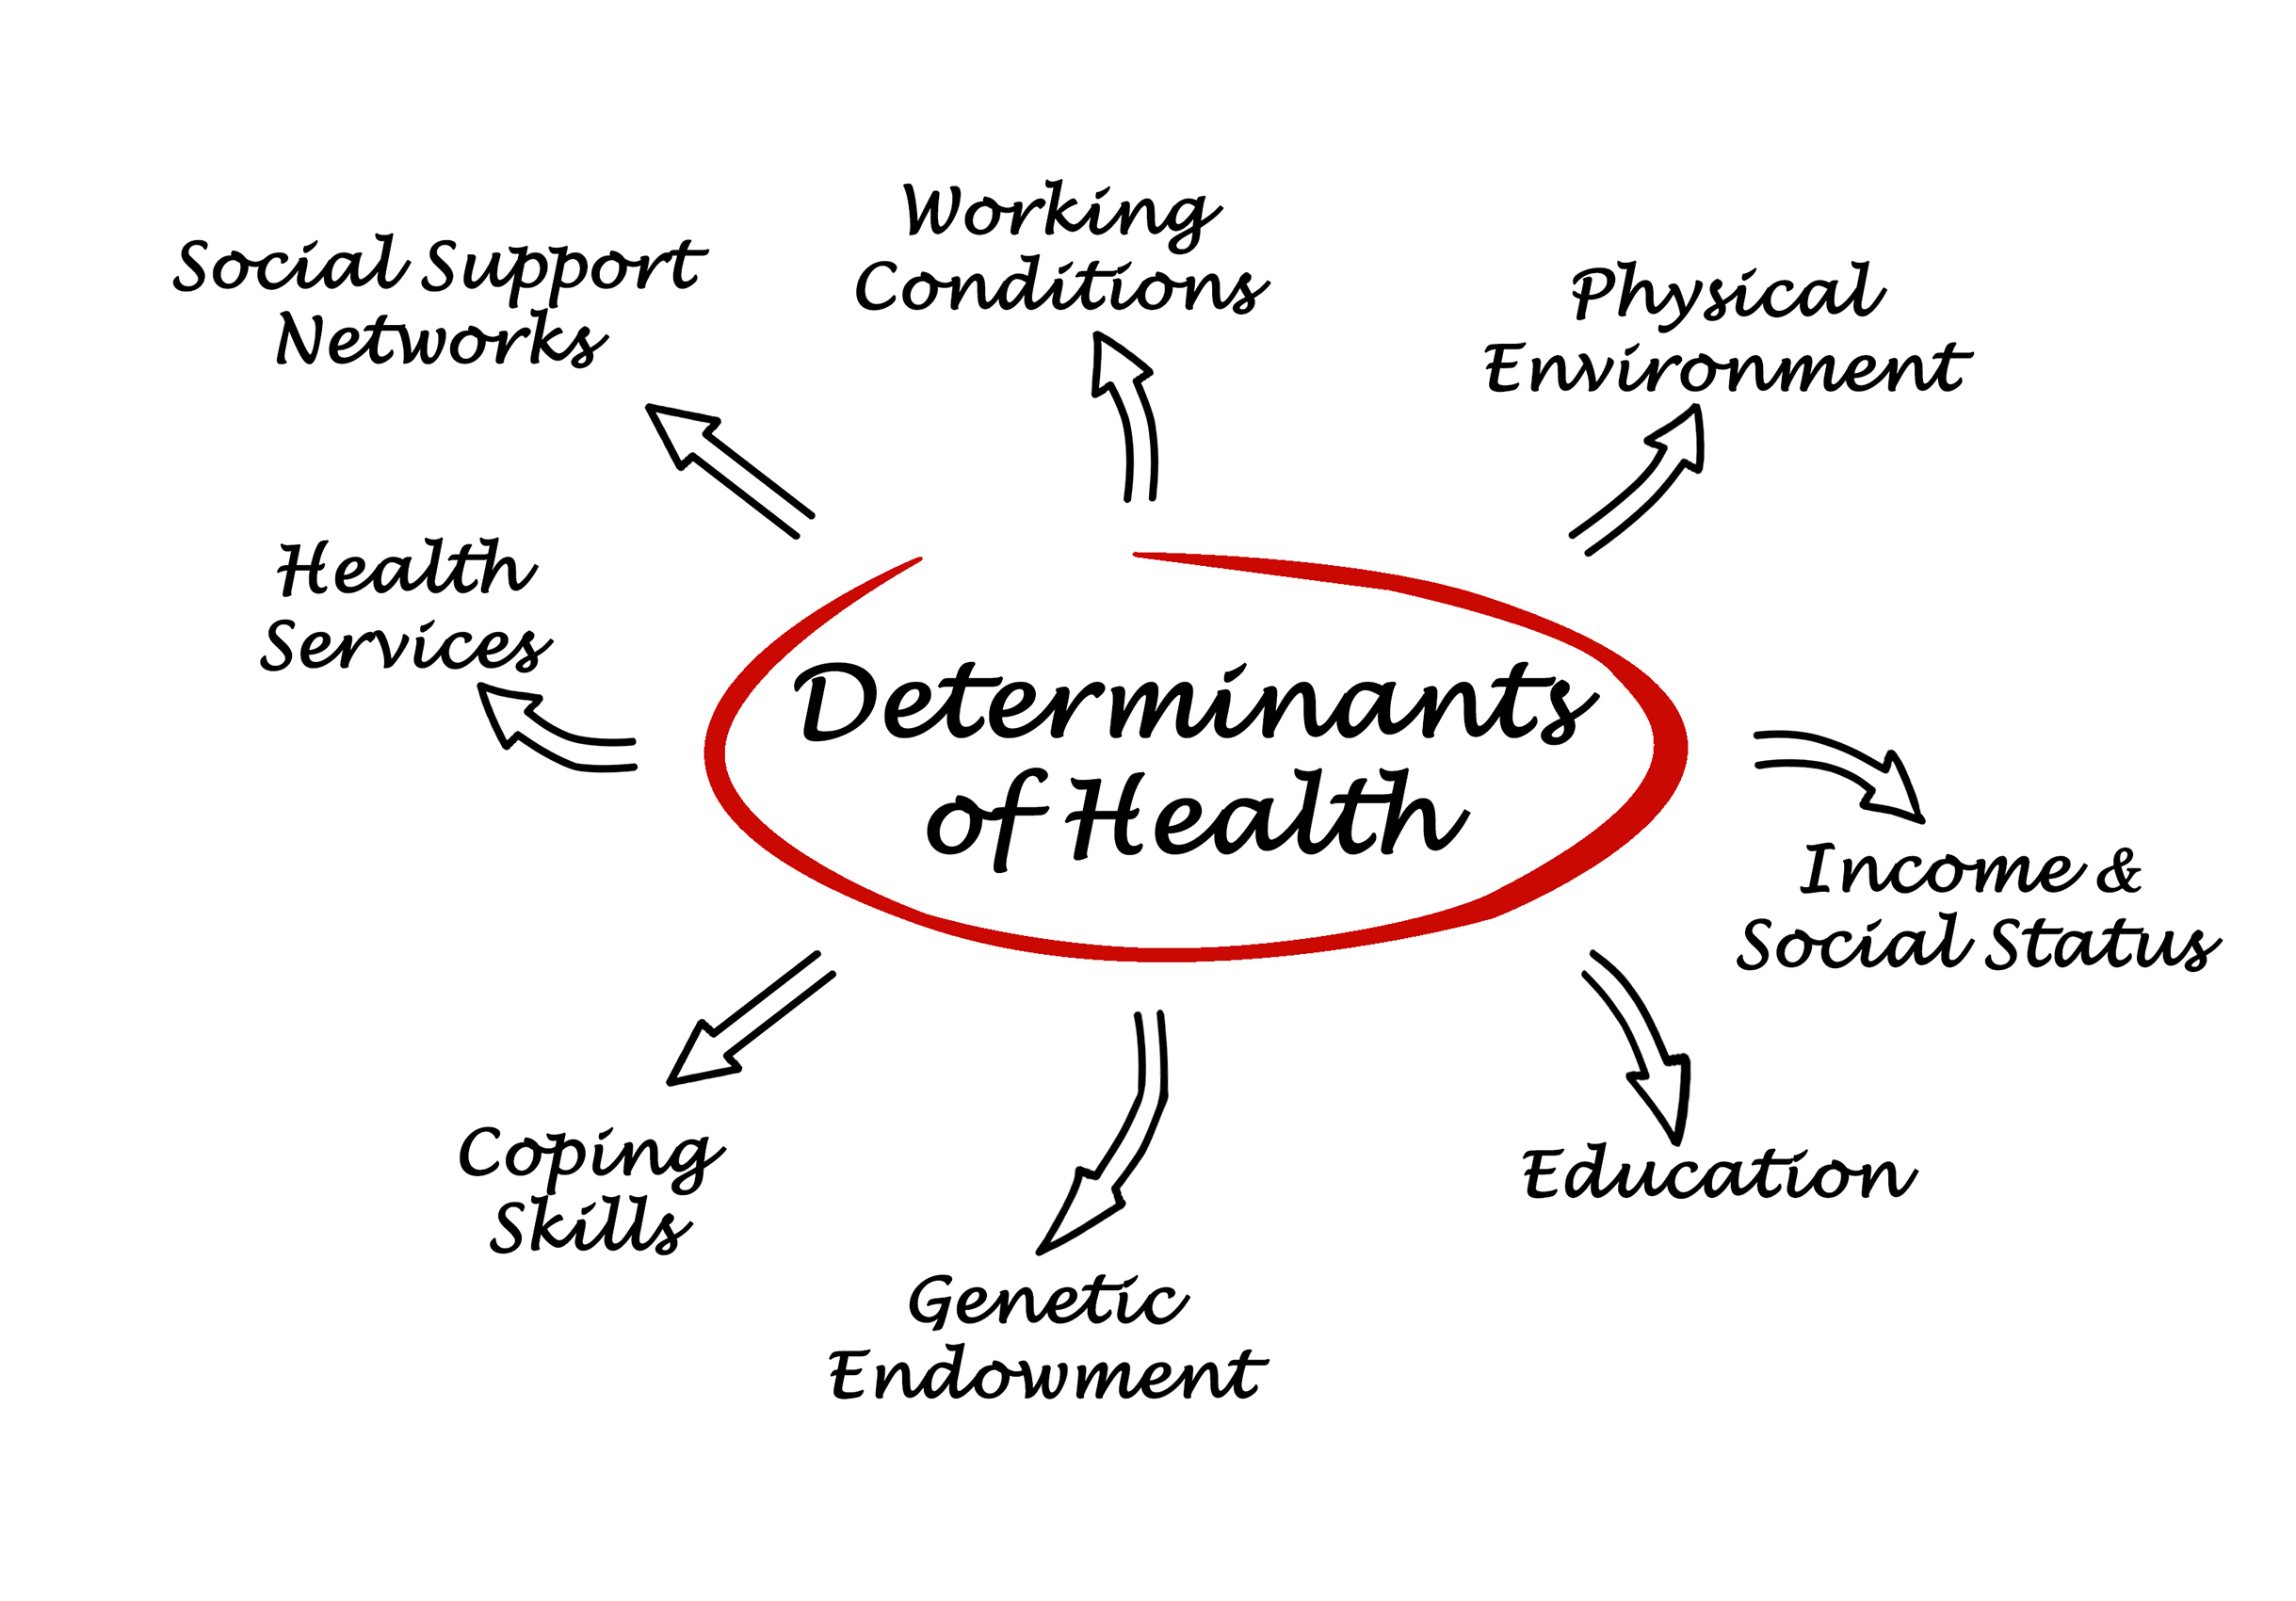 Word cloud of the social determinants of health